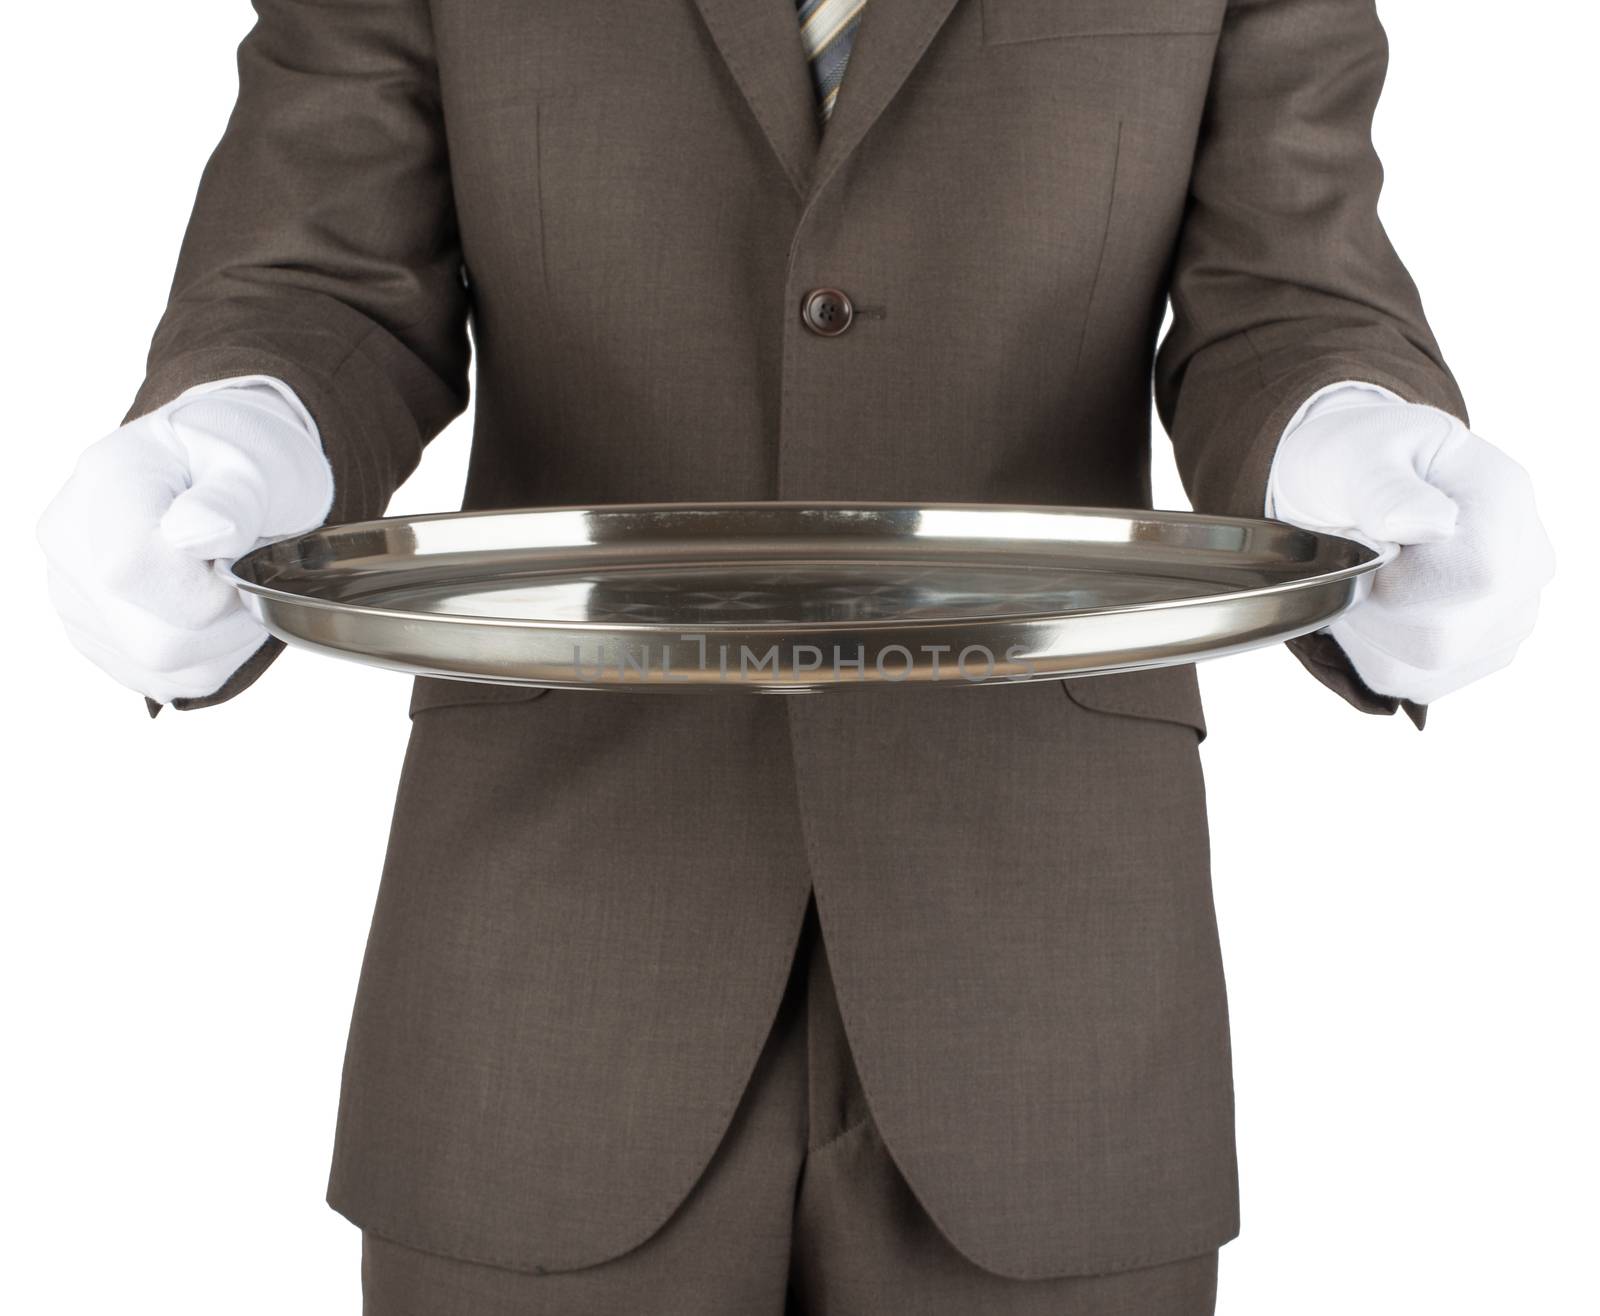 Waiter holding empty silver tray by cherezoff